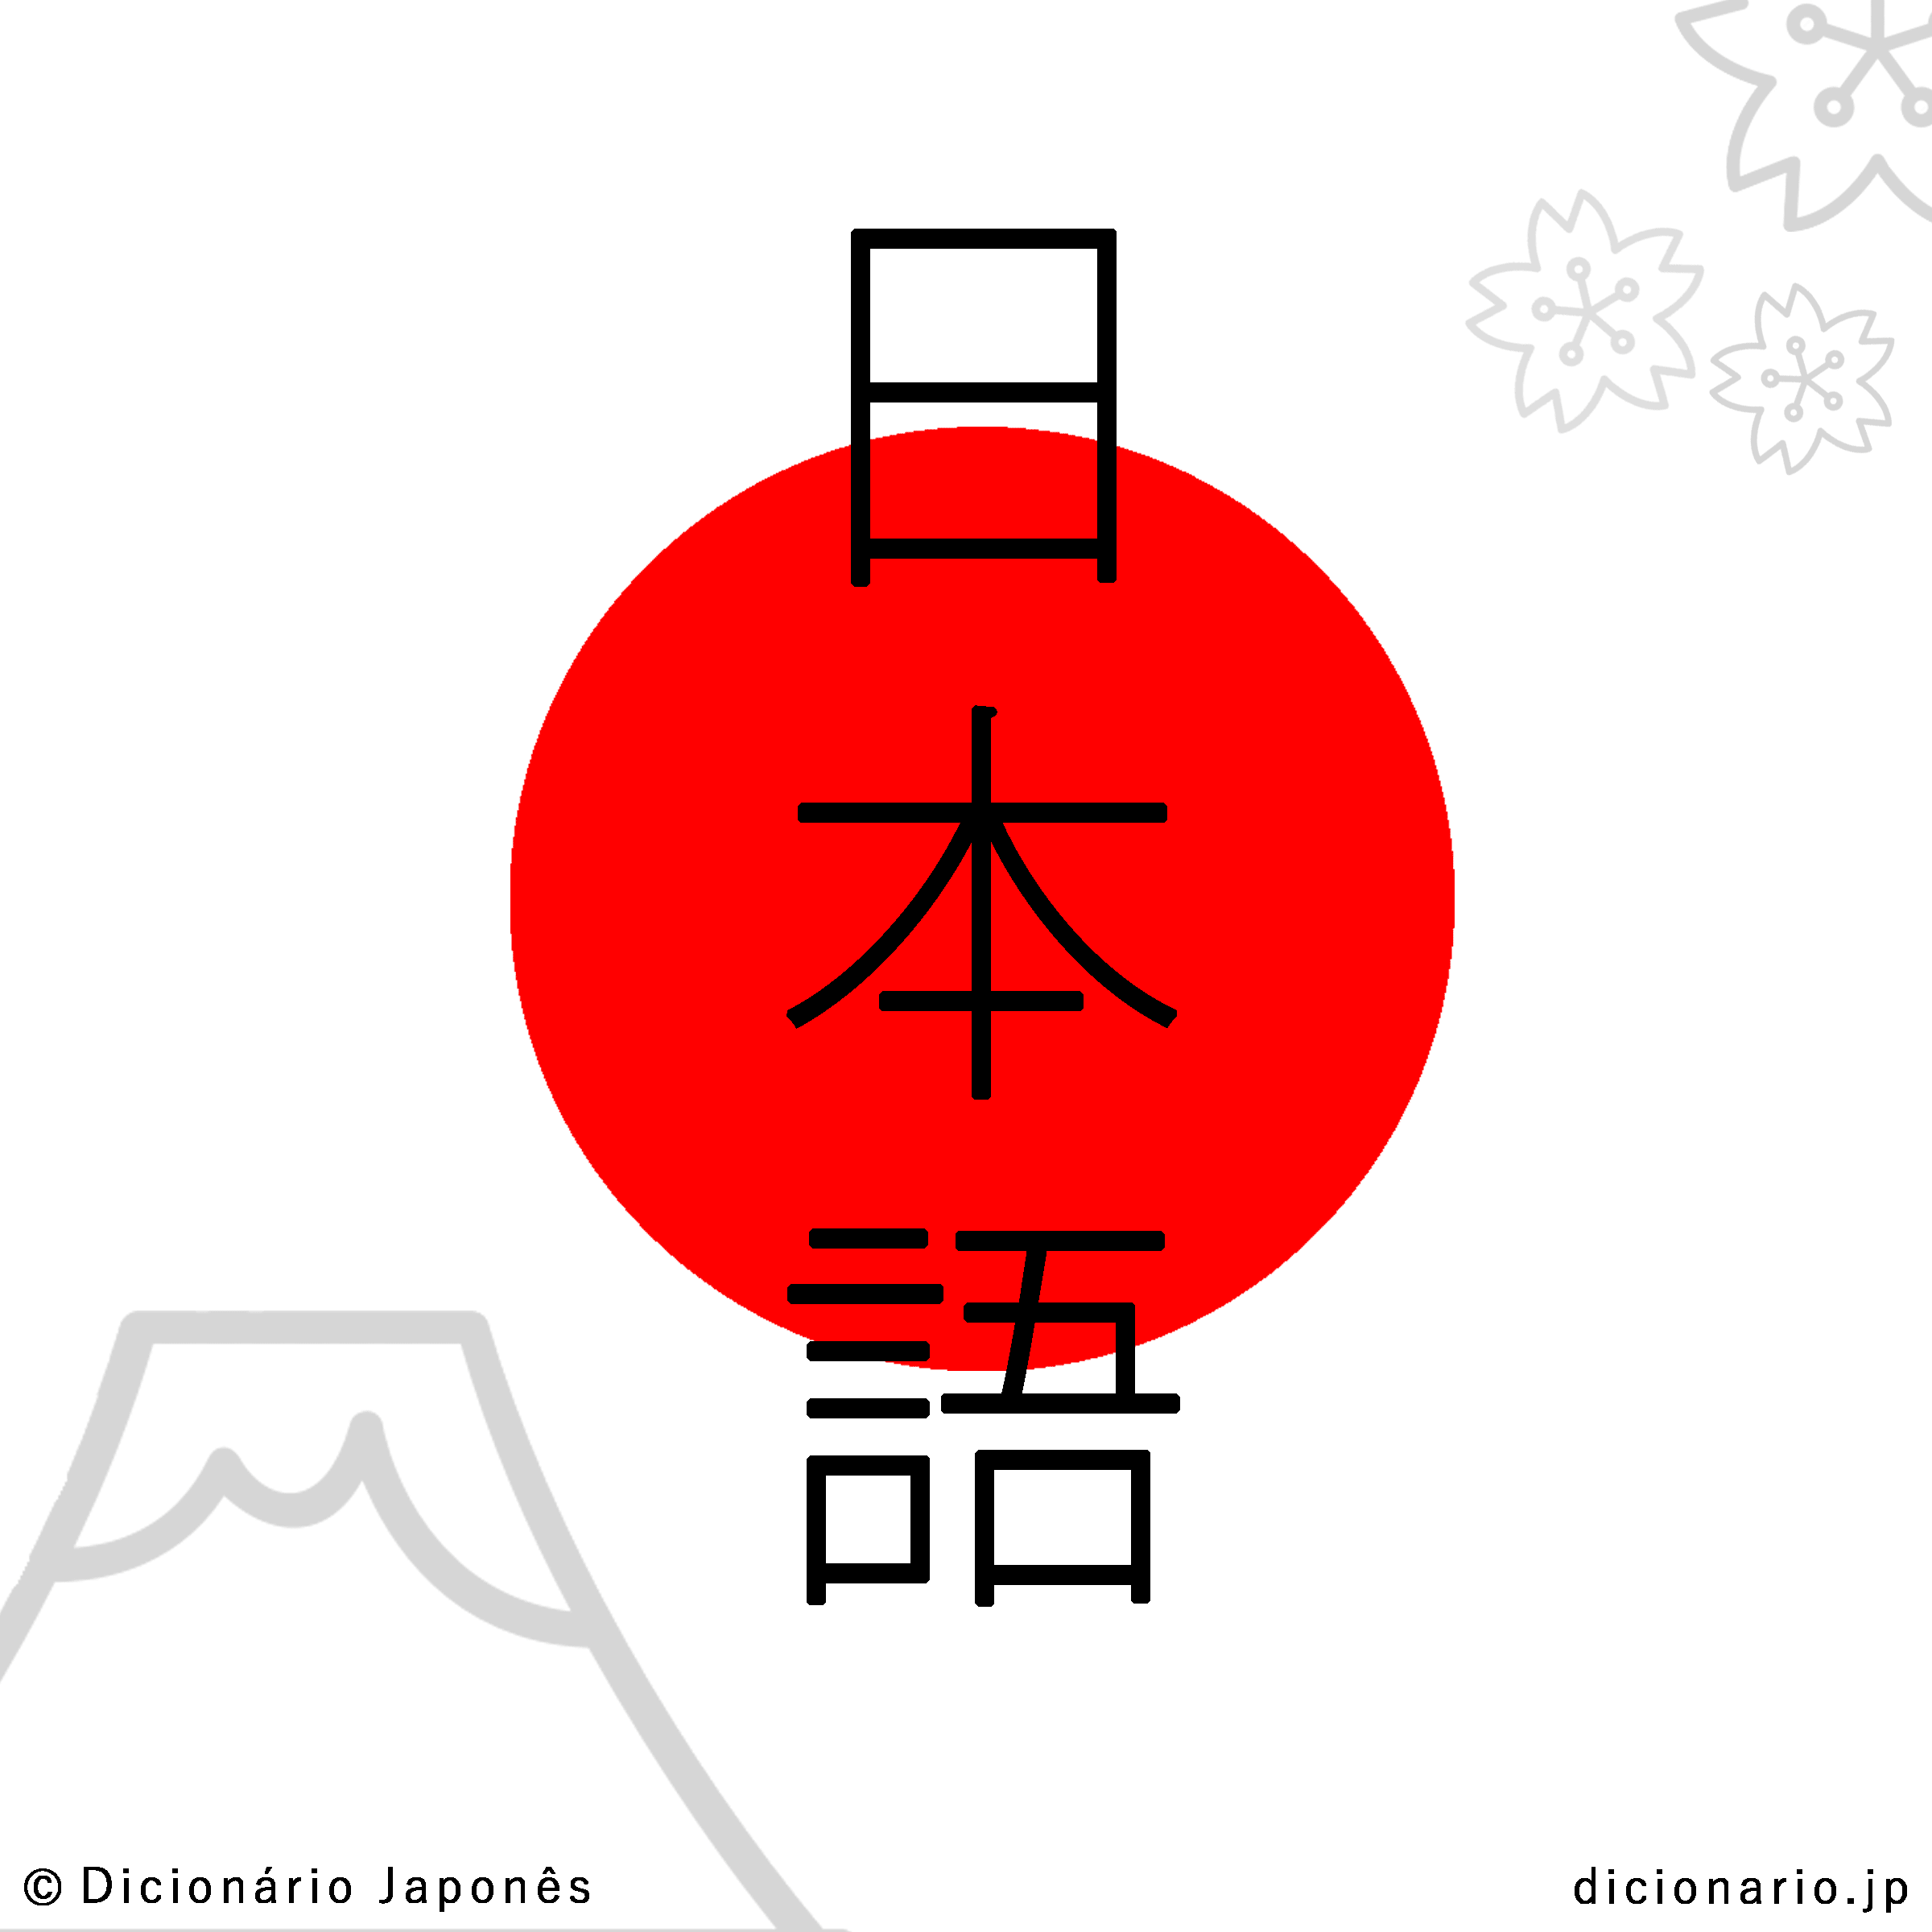 Dicionário Japonês - AppStore, itunes